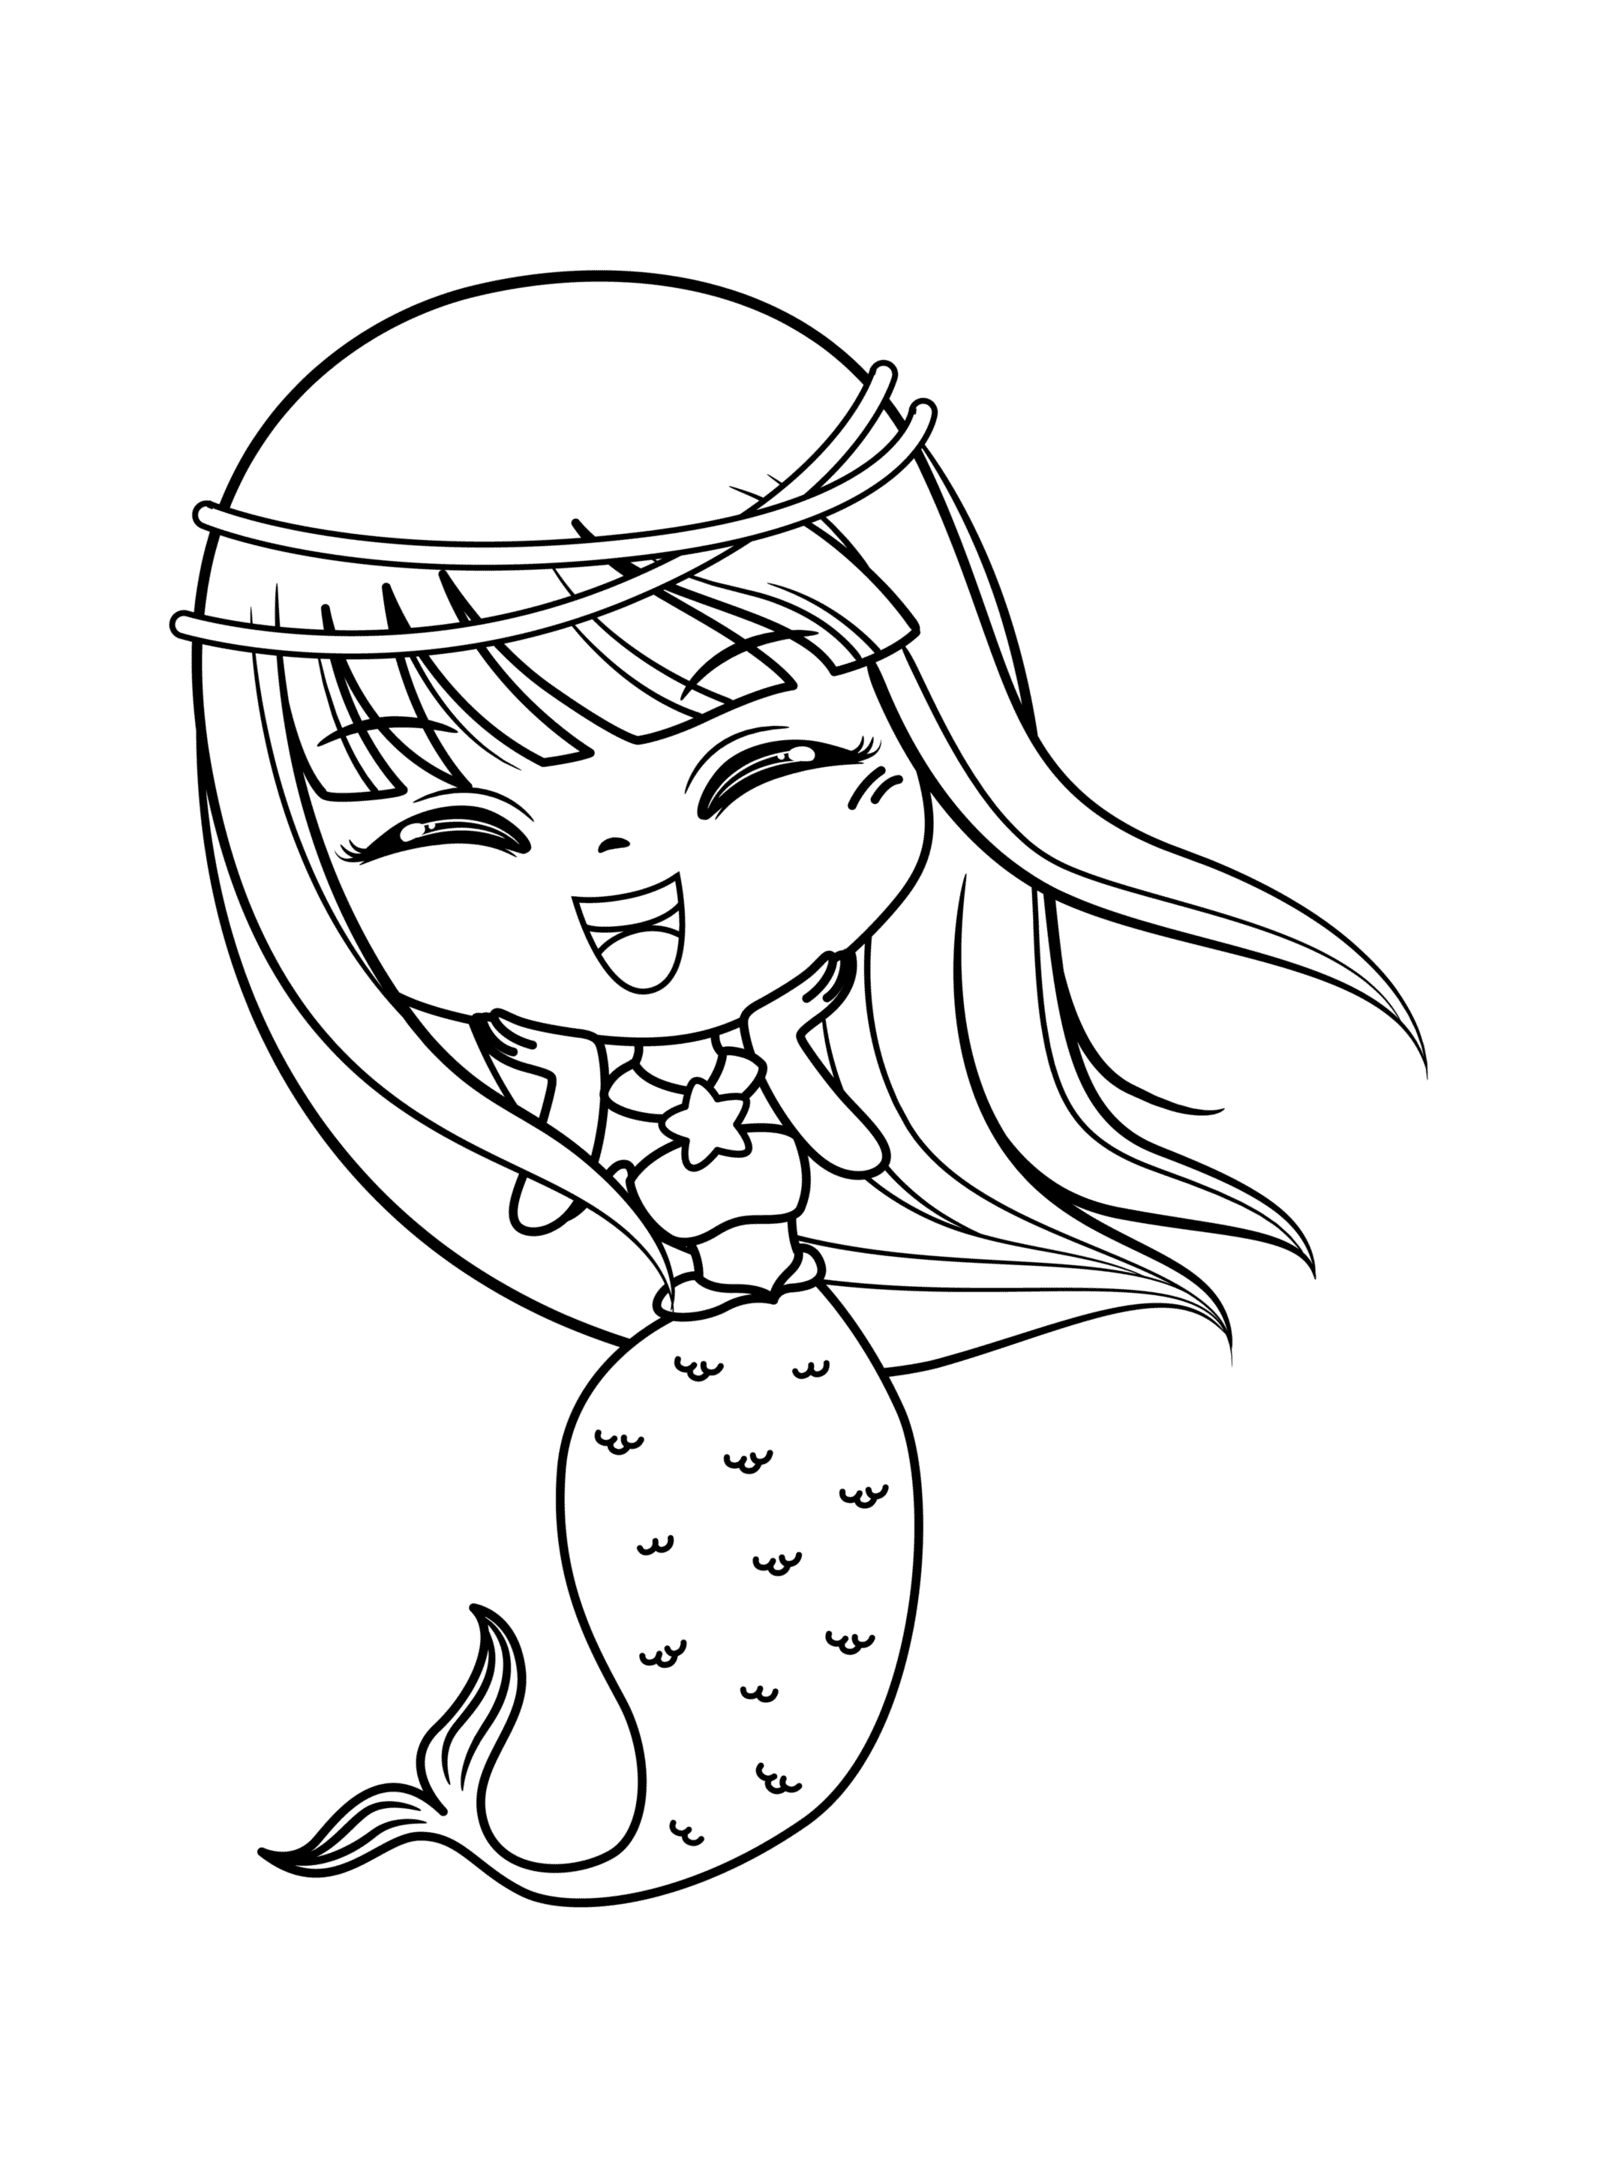 Malbild - Lachende Meerjungfrau